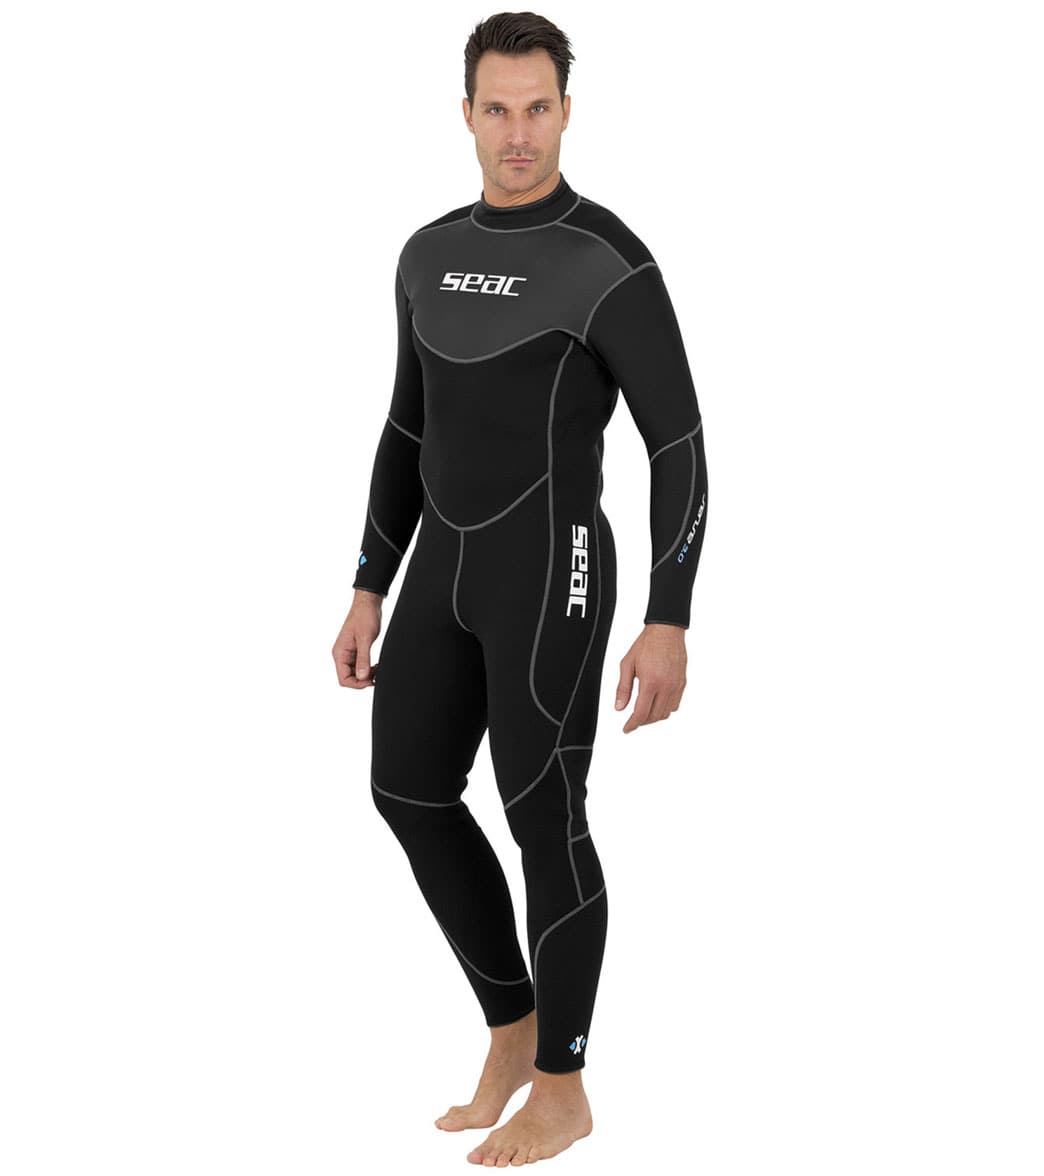 Seac USA Mens Sense Black 3mm Full Wetsuit at SwimOutlet